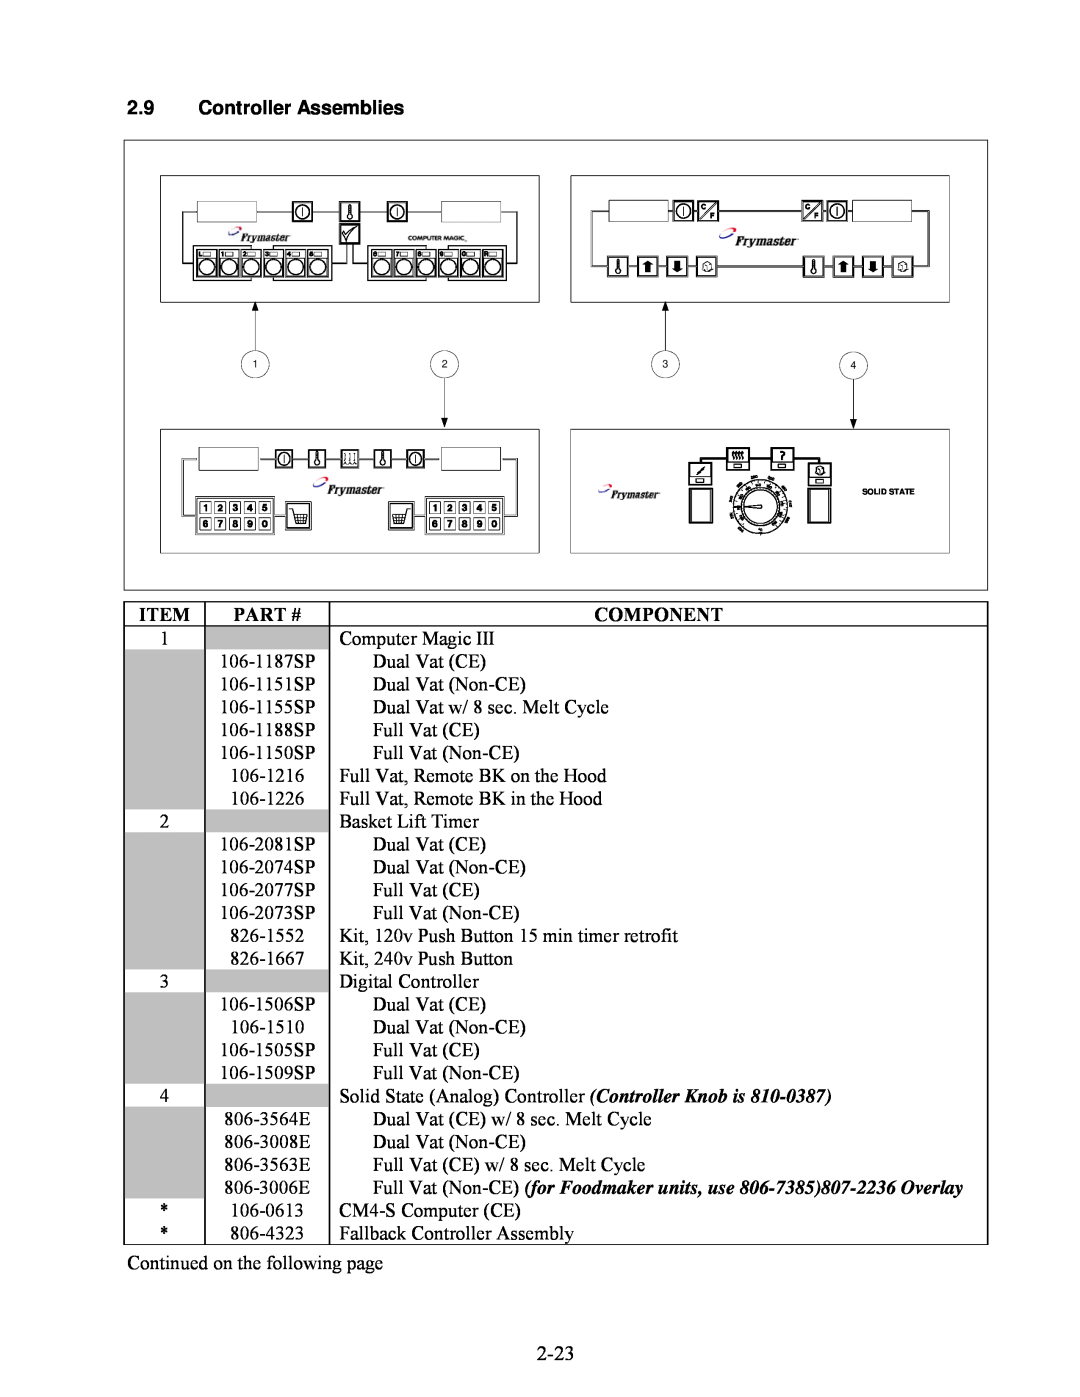 Frymaster H50 Series manual 2.9Controller Assemblies, Item, Part #, Component 